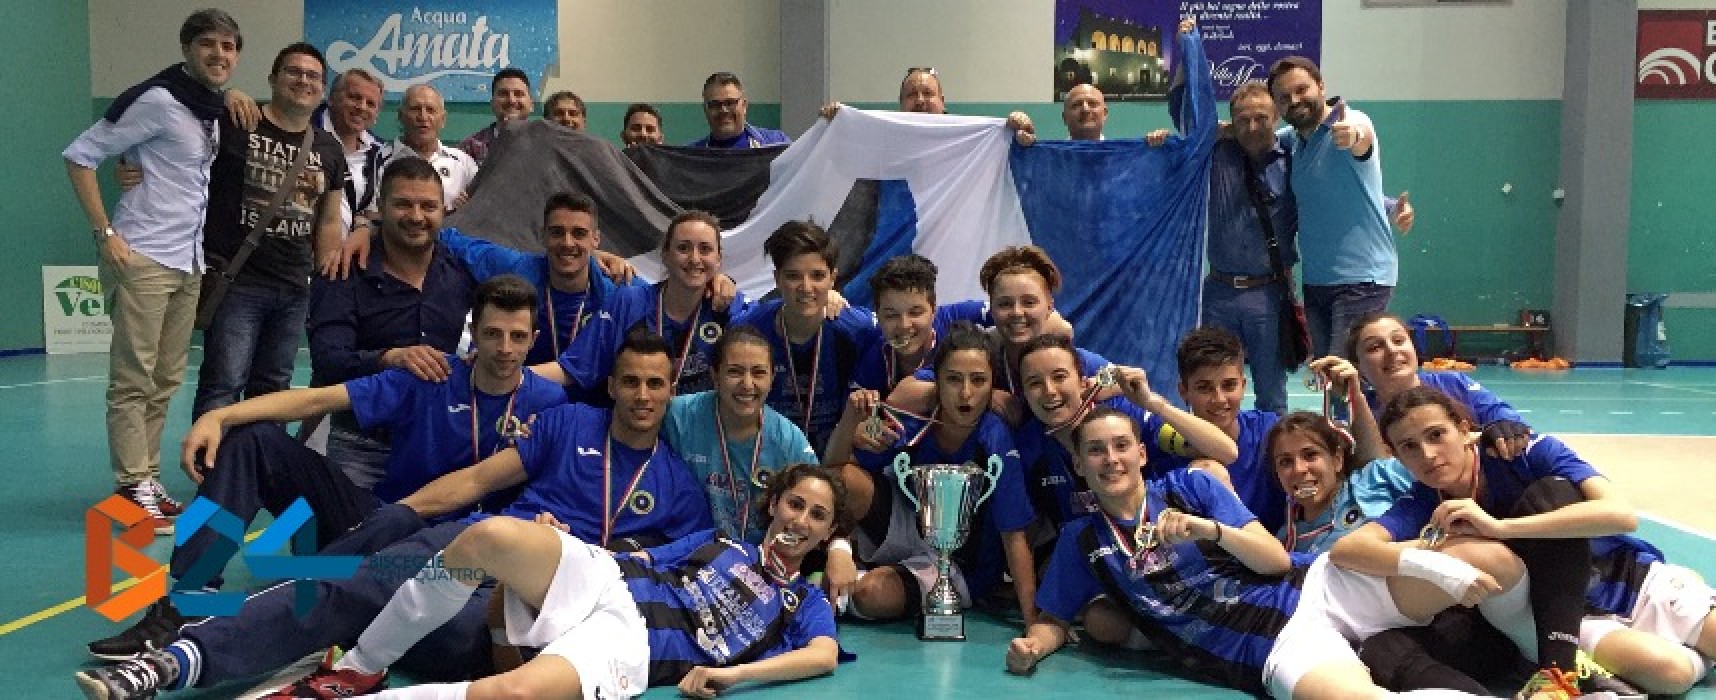 Futsal Bisceglie, la compagine femminile è promossa in serie A